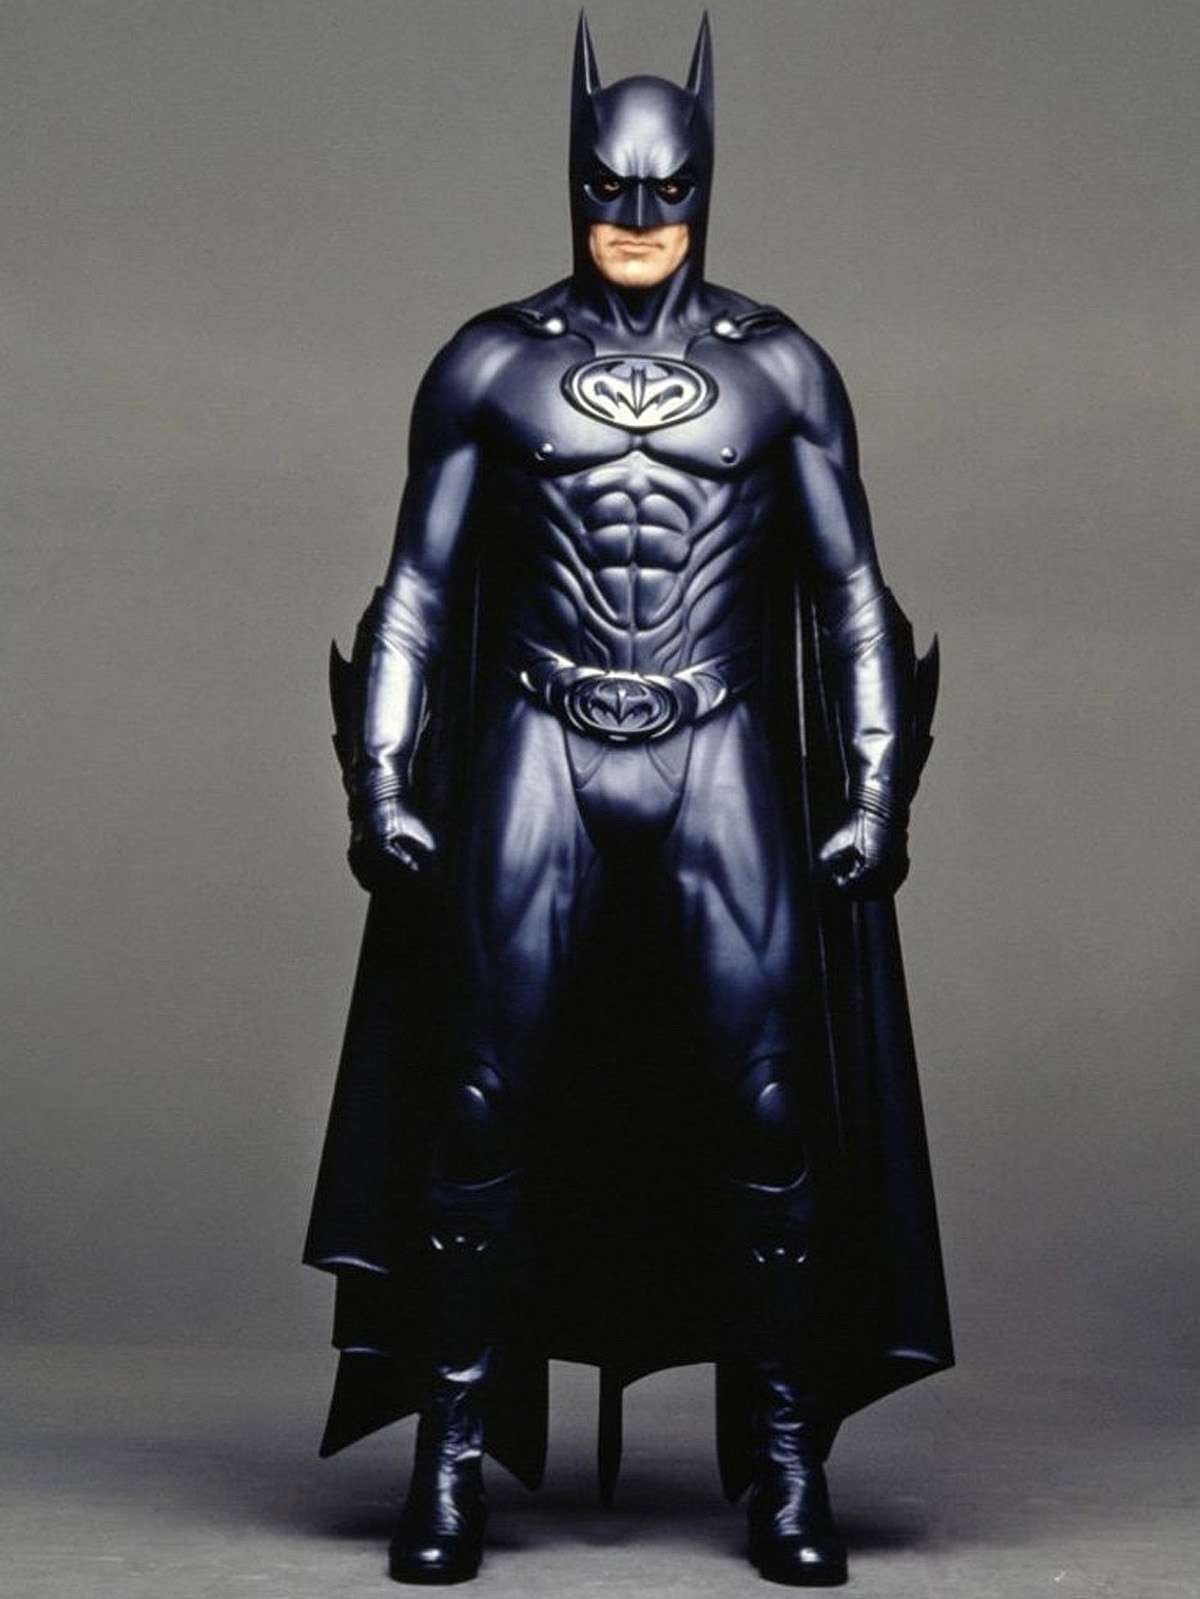 George Clooney's Batsuit in Batman & Robin.